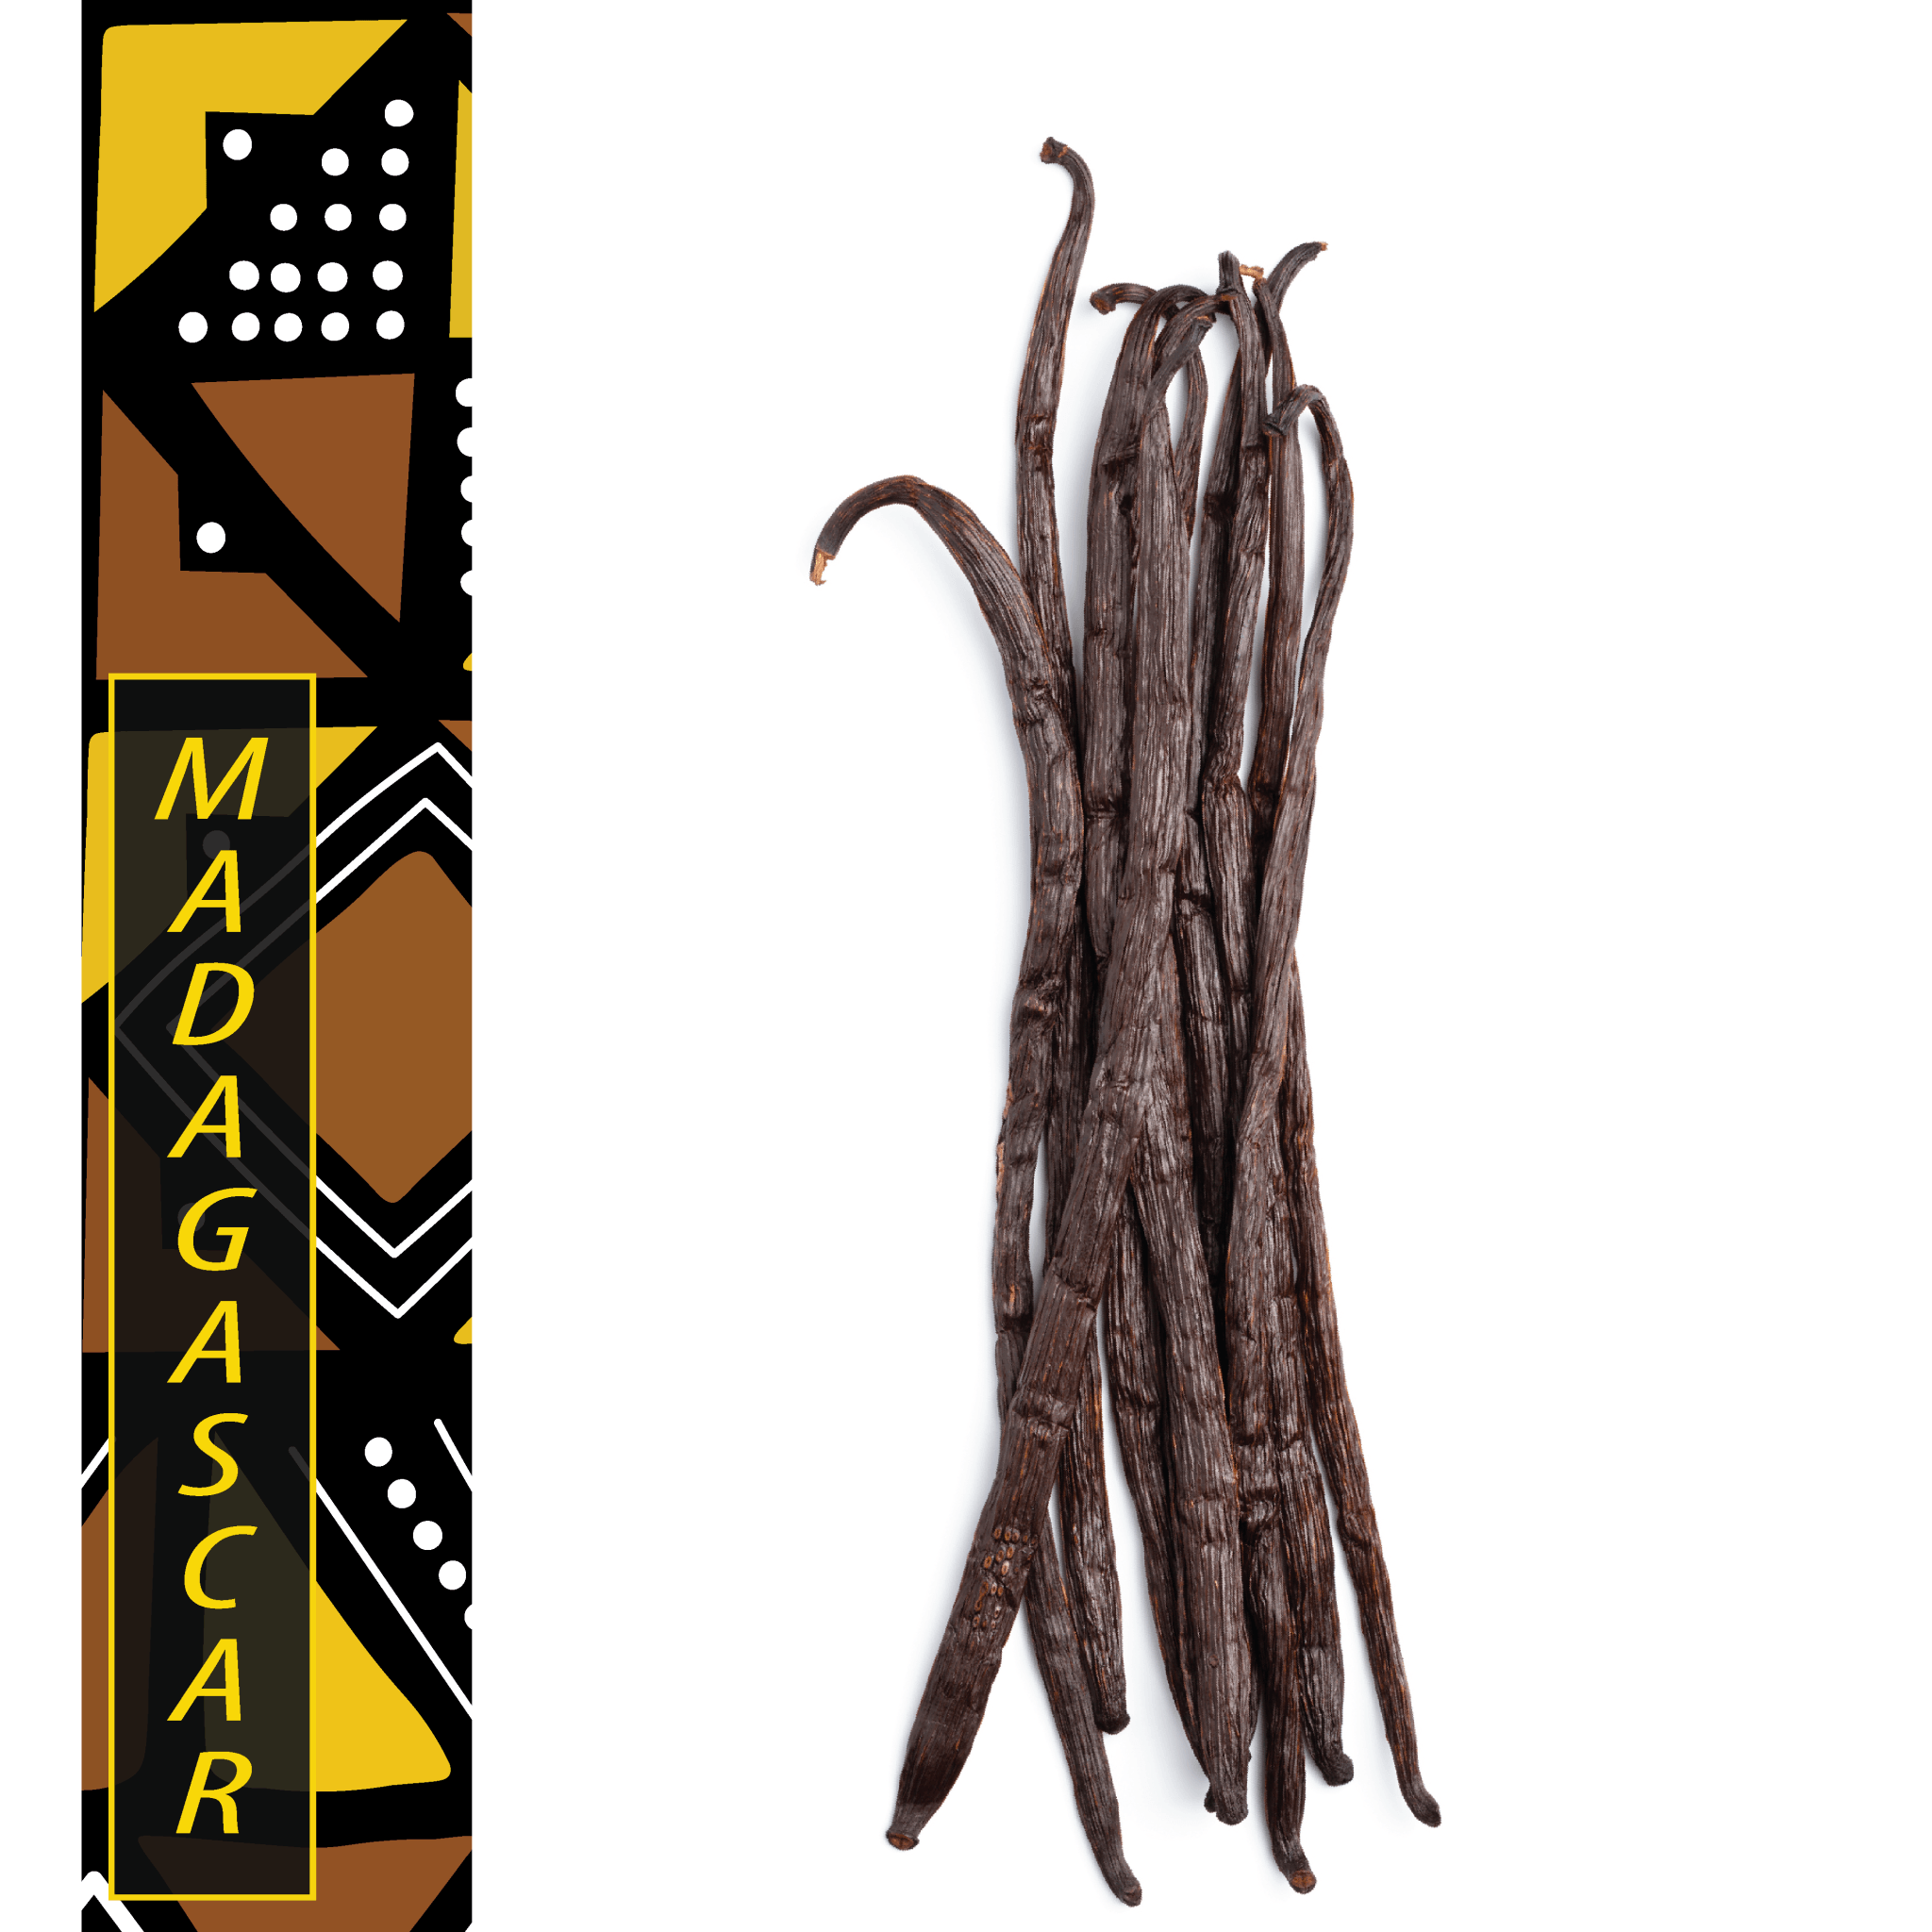 The whole history of Madagascar vanilla